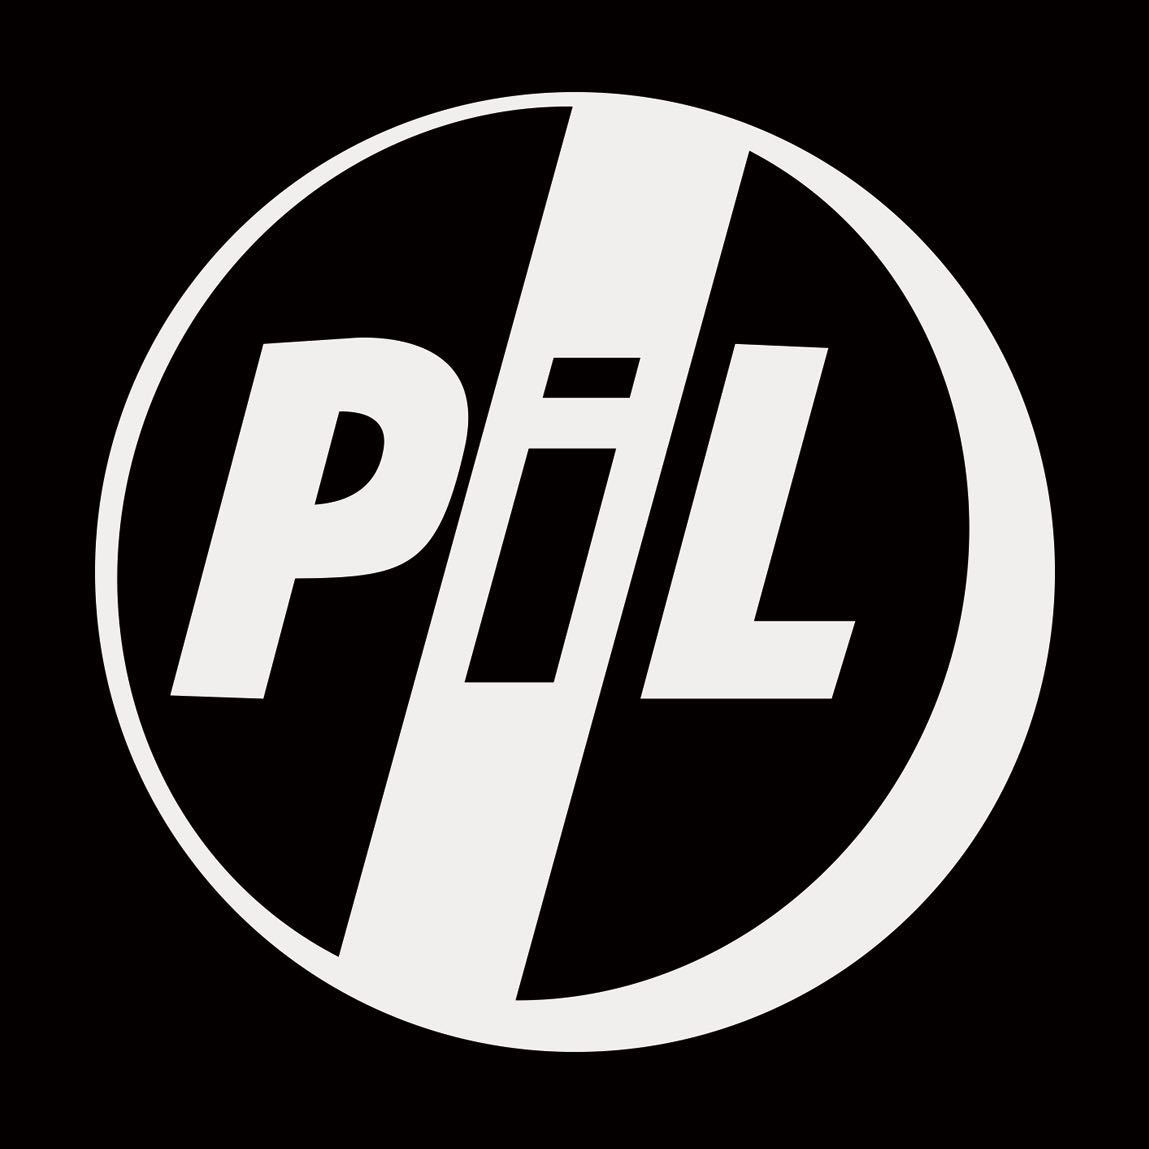 Public image ltd. Ltd лого. The Limited логотип. Группа public image Ltd. Паблик имидж Лимитед.